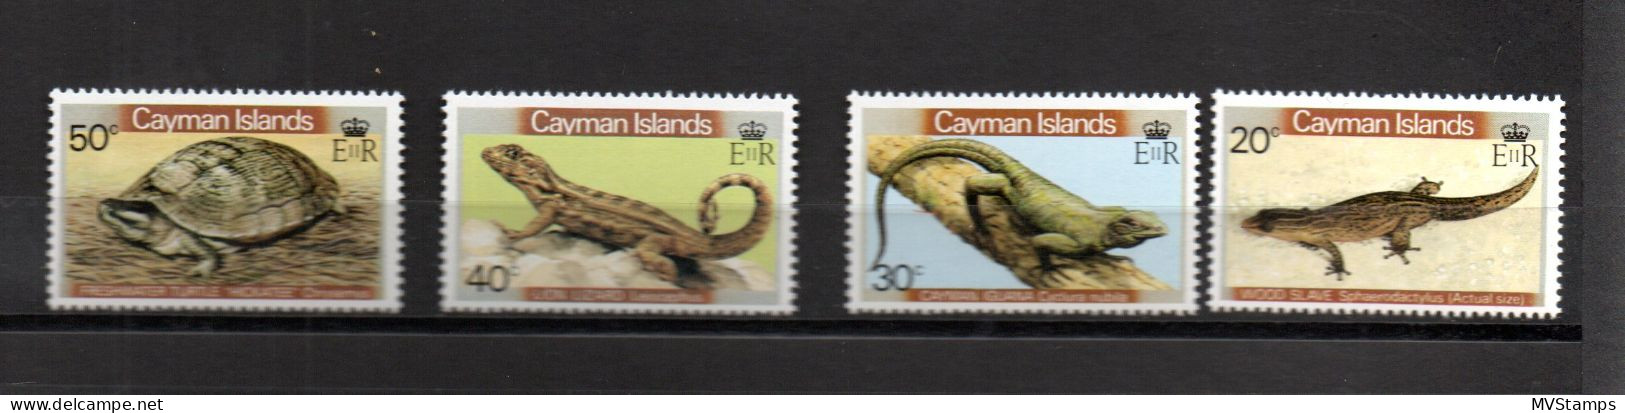 Cayman Islands 1981 Old Set Turtle/lizard Stamps (Michel 471/74) Nice MNH - Kaaiman Eilanden